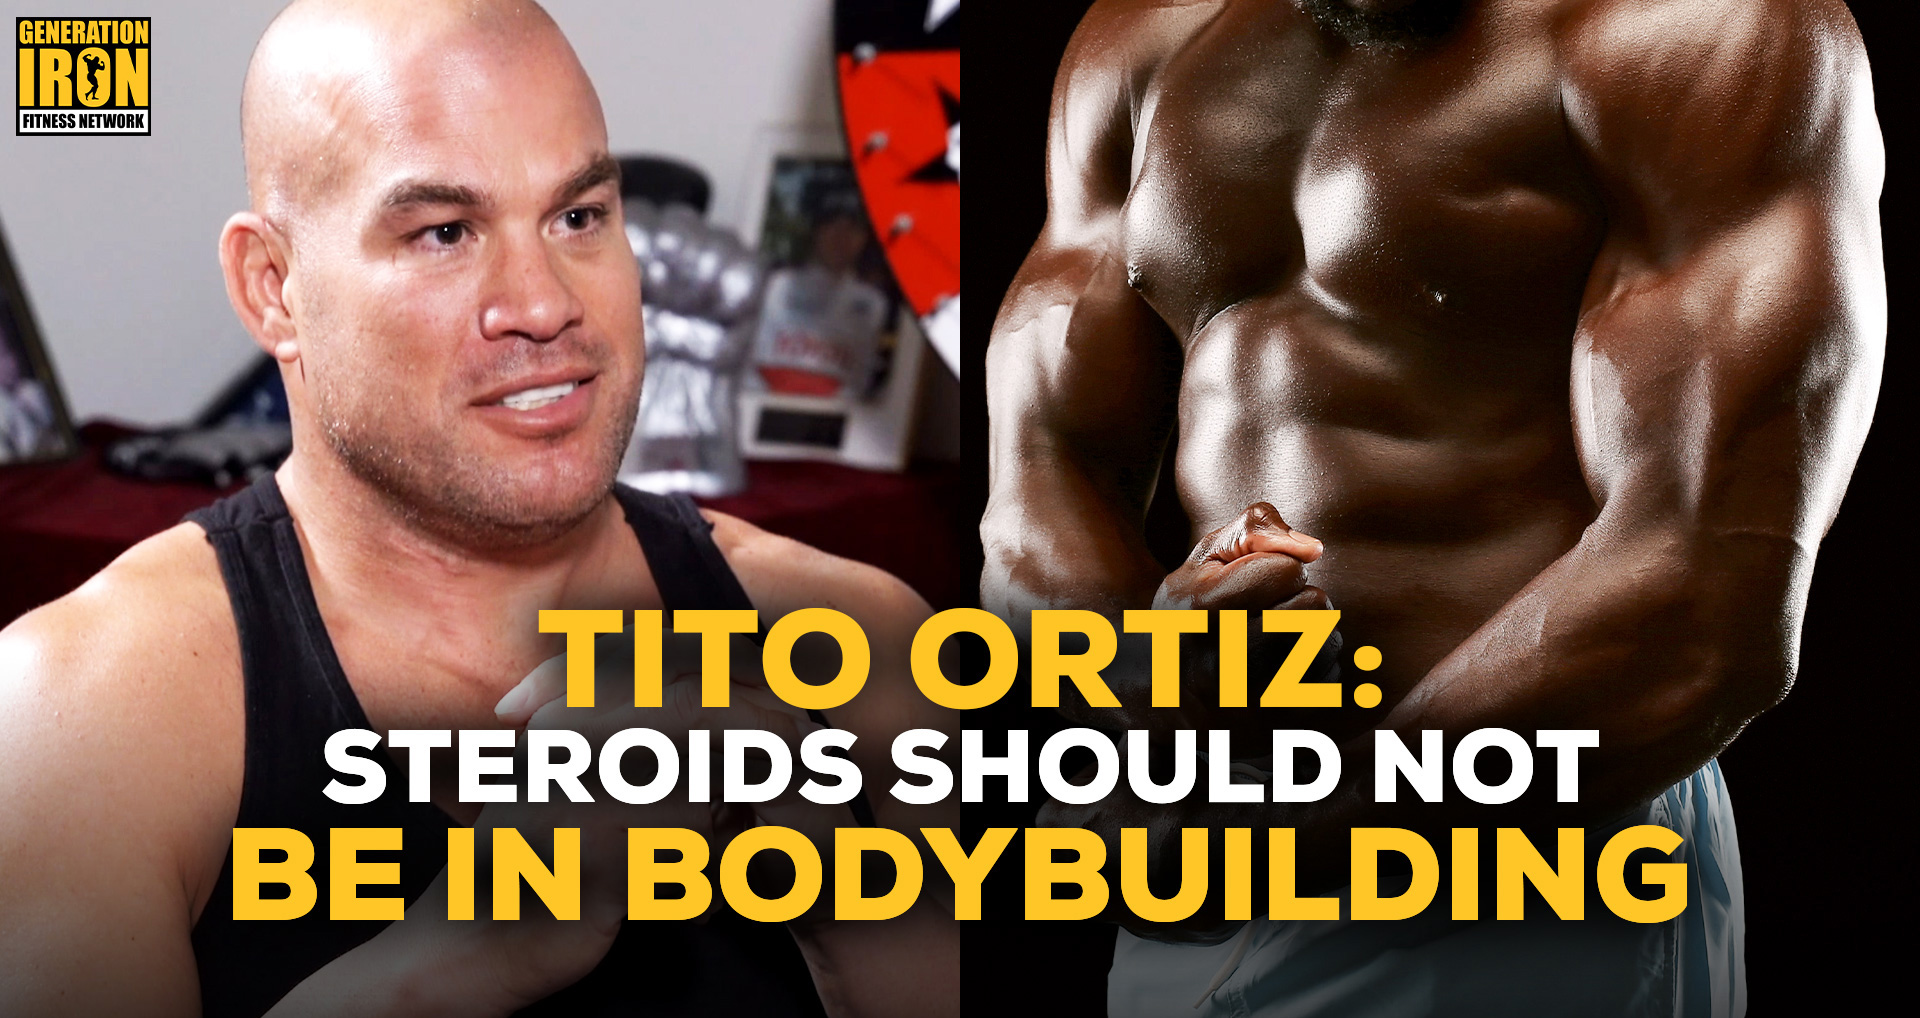 Tito Ortiz: Bodybuilders On Steroids Look Like “Skinny Broken Down Old Men” By Age 60